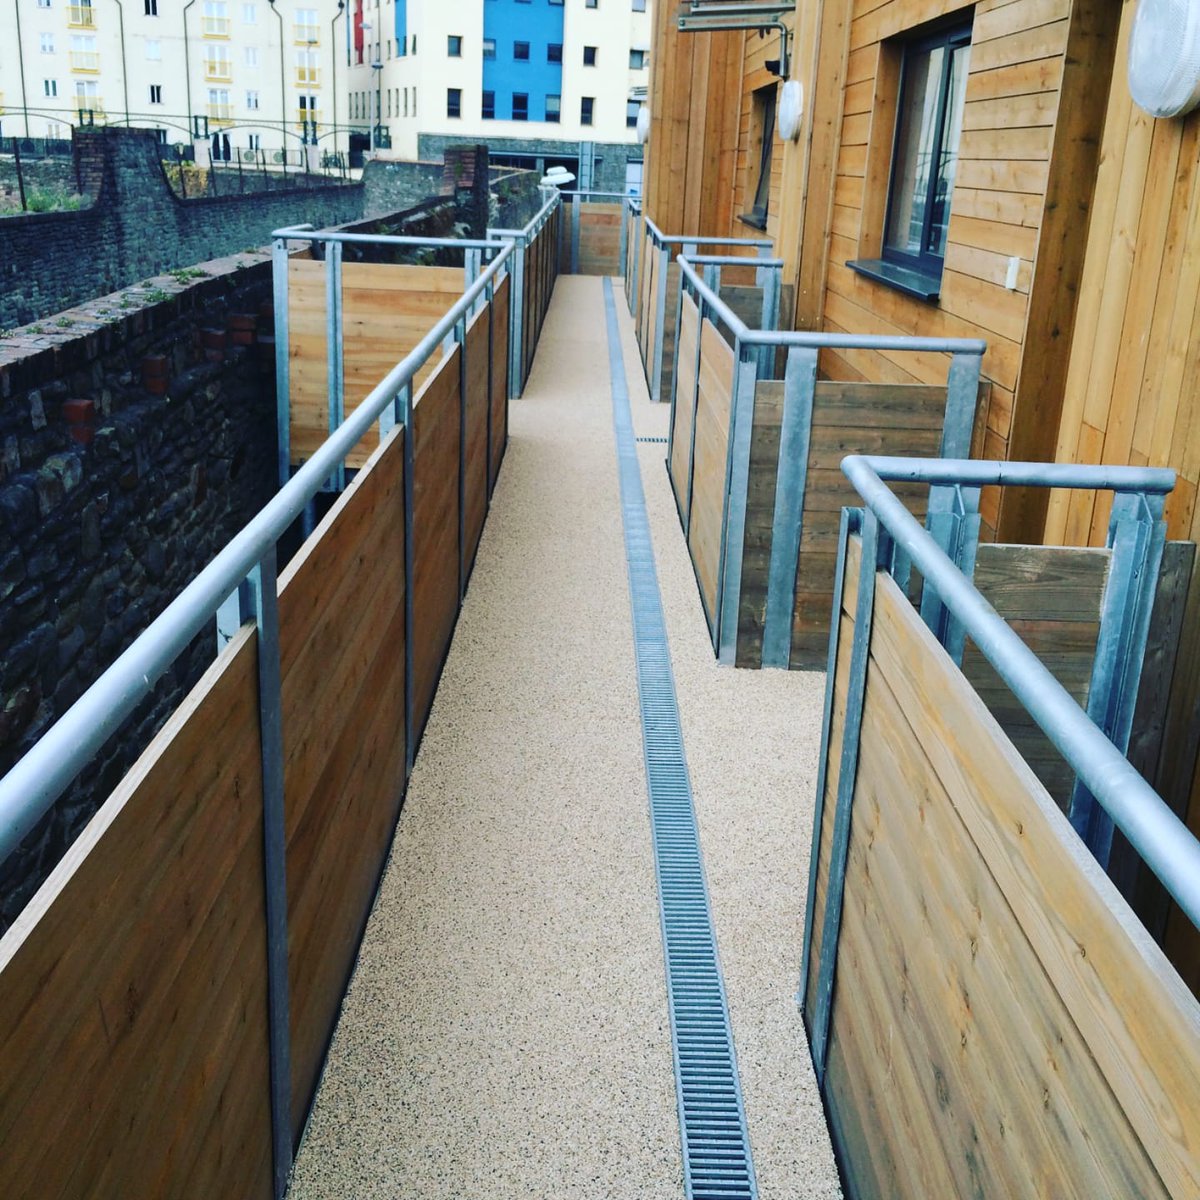 Resin bonded stone waterproofing non slip job in Bristol.
#resin #resinbonded #resinbondedgravel #resinbound #balcony #waterproofing #nonslip #walkway #appartment #bristolharbour #bristol #northsomerset #surebondsurfaceduk #surebondsurfaces #surebondresin